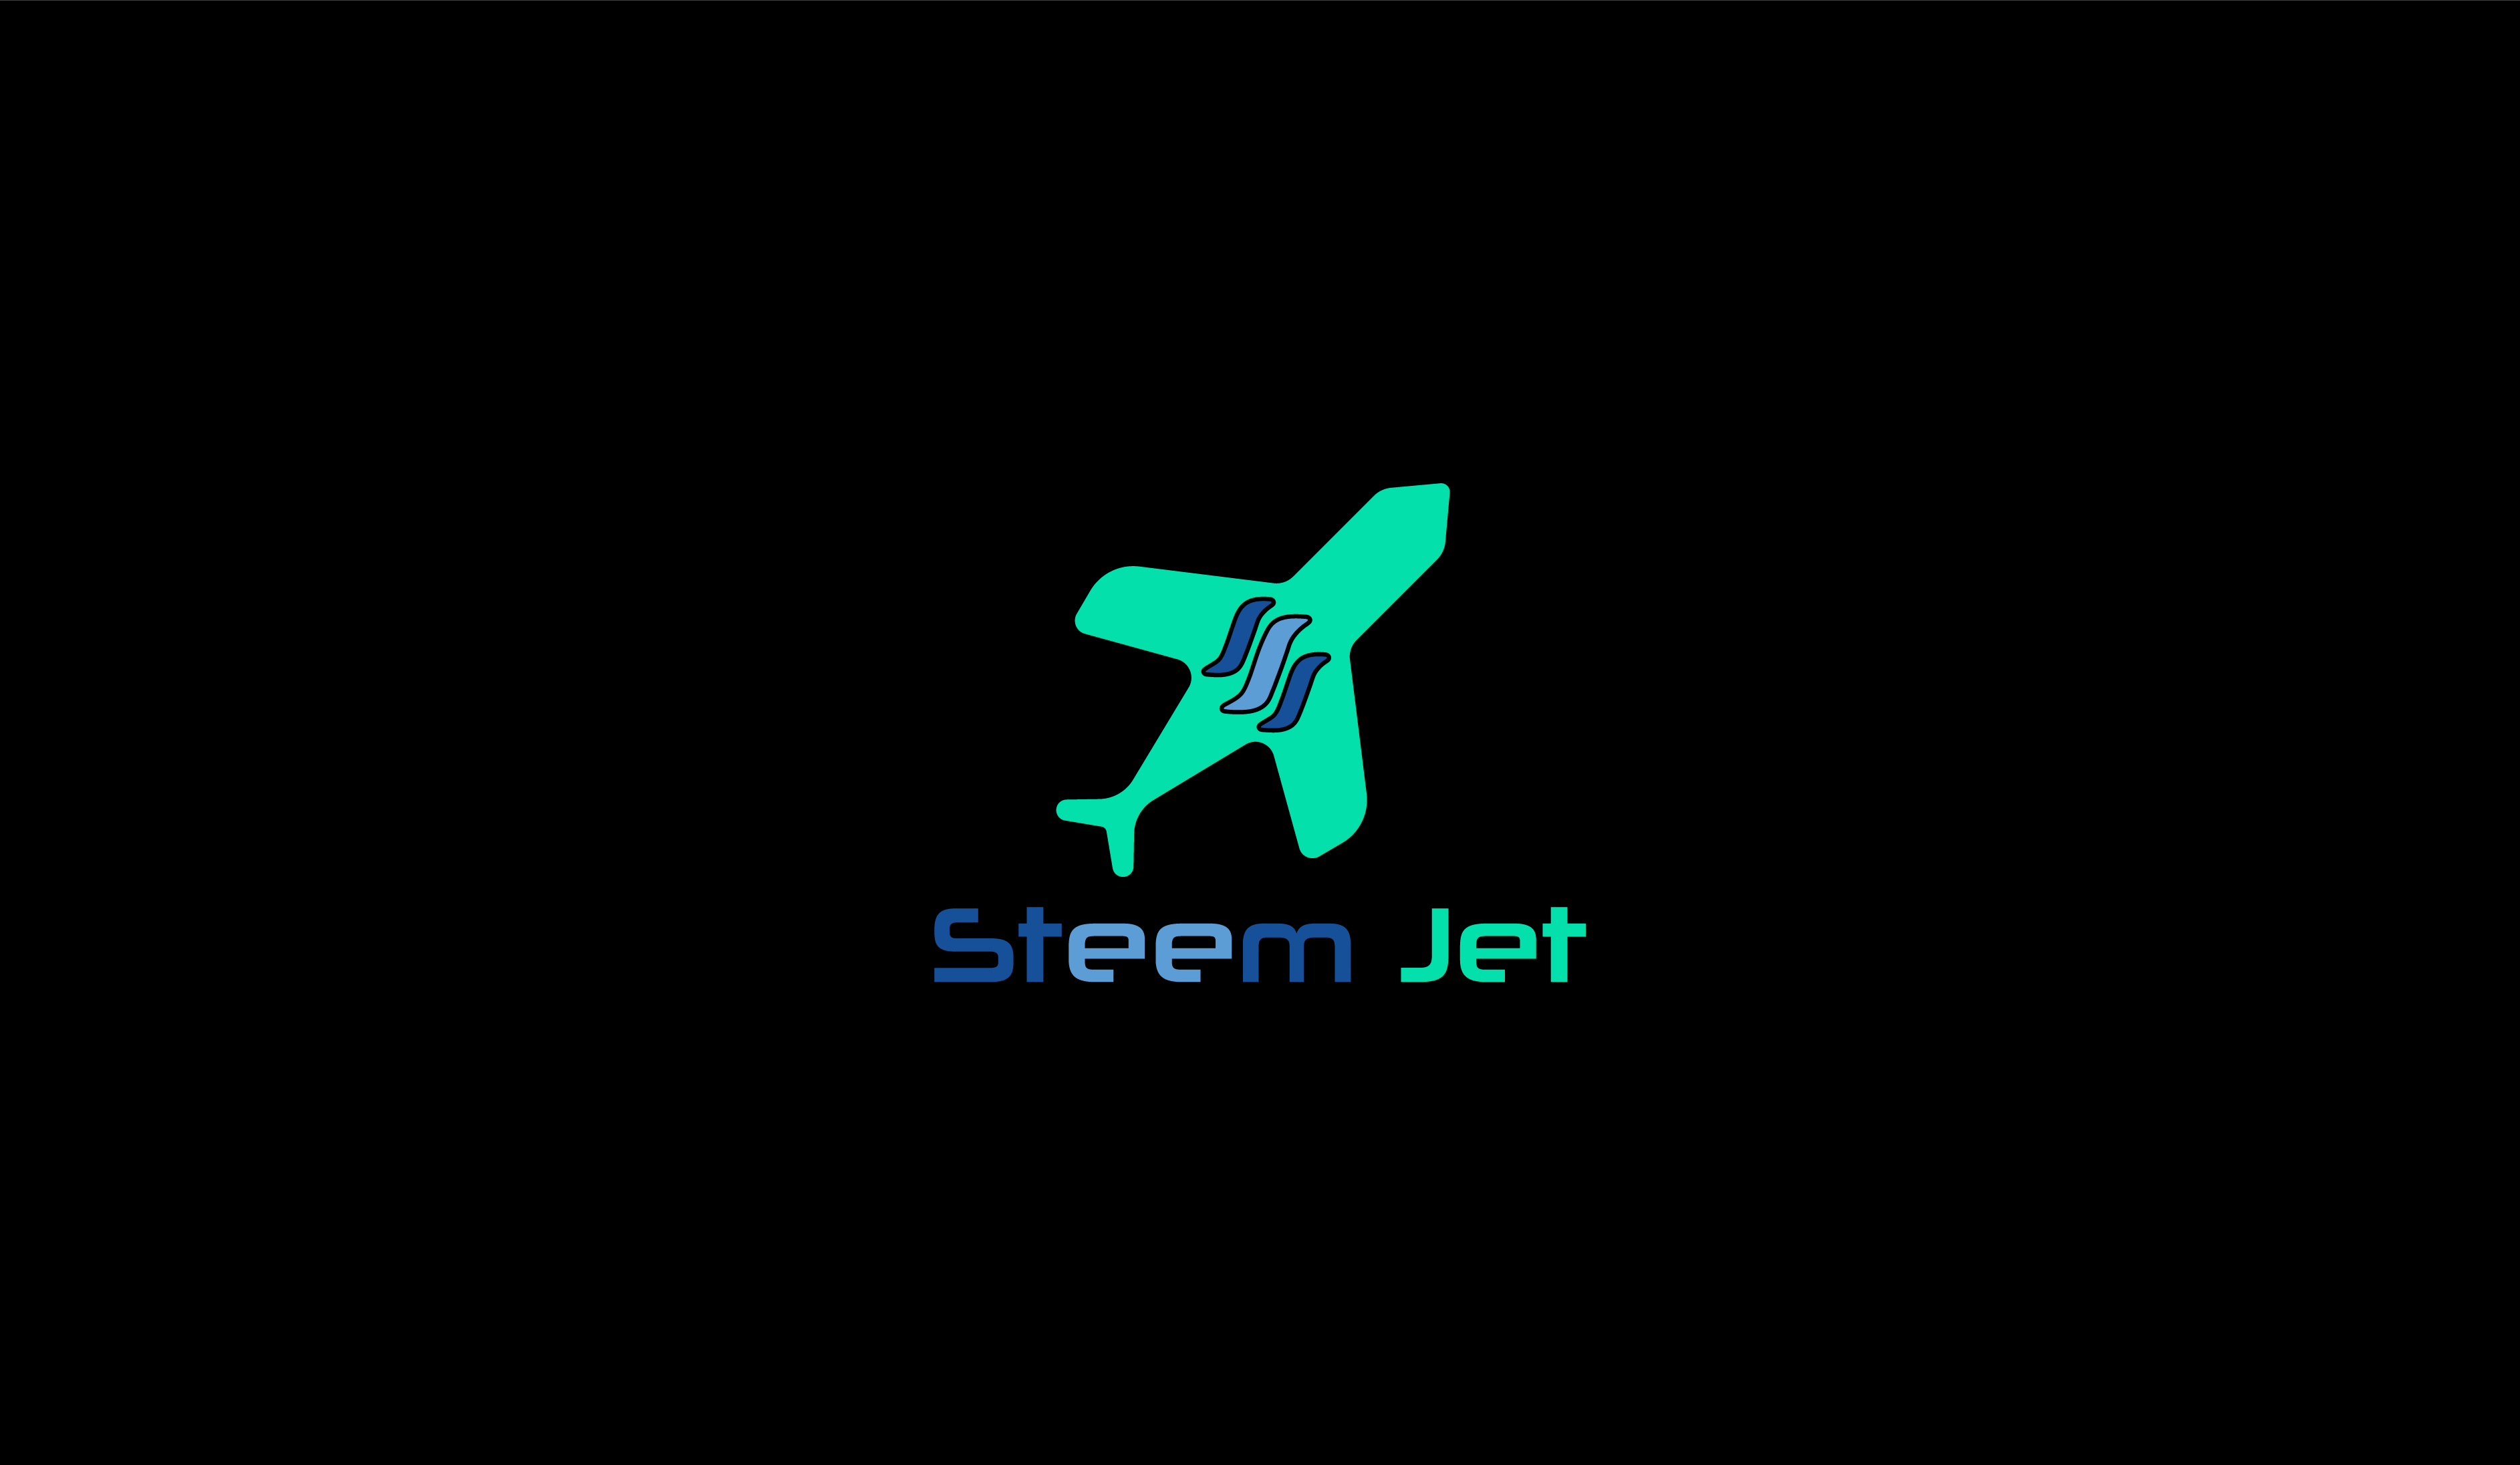 steem jet-02.jpg